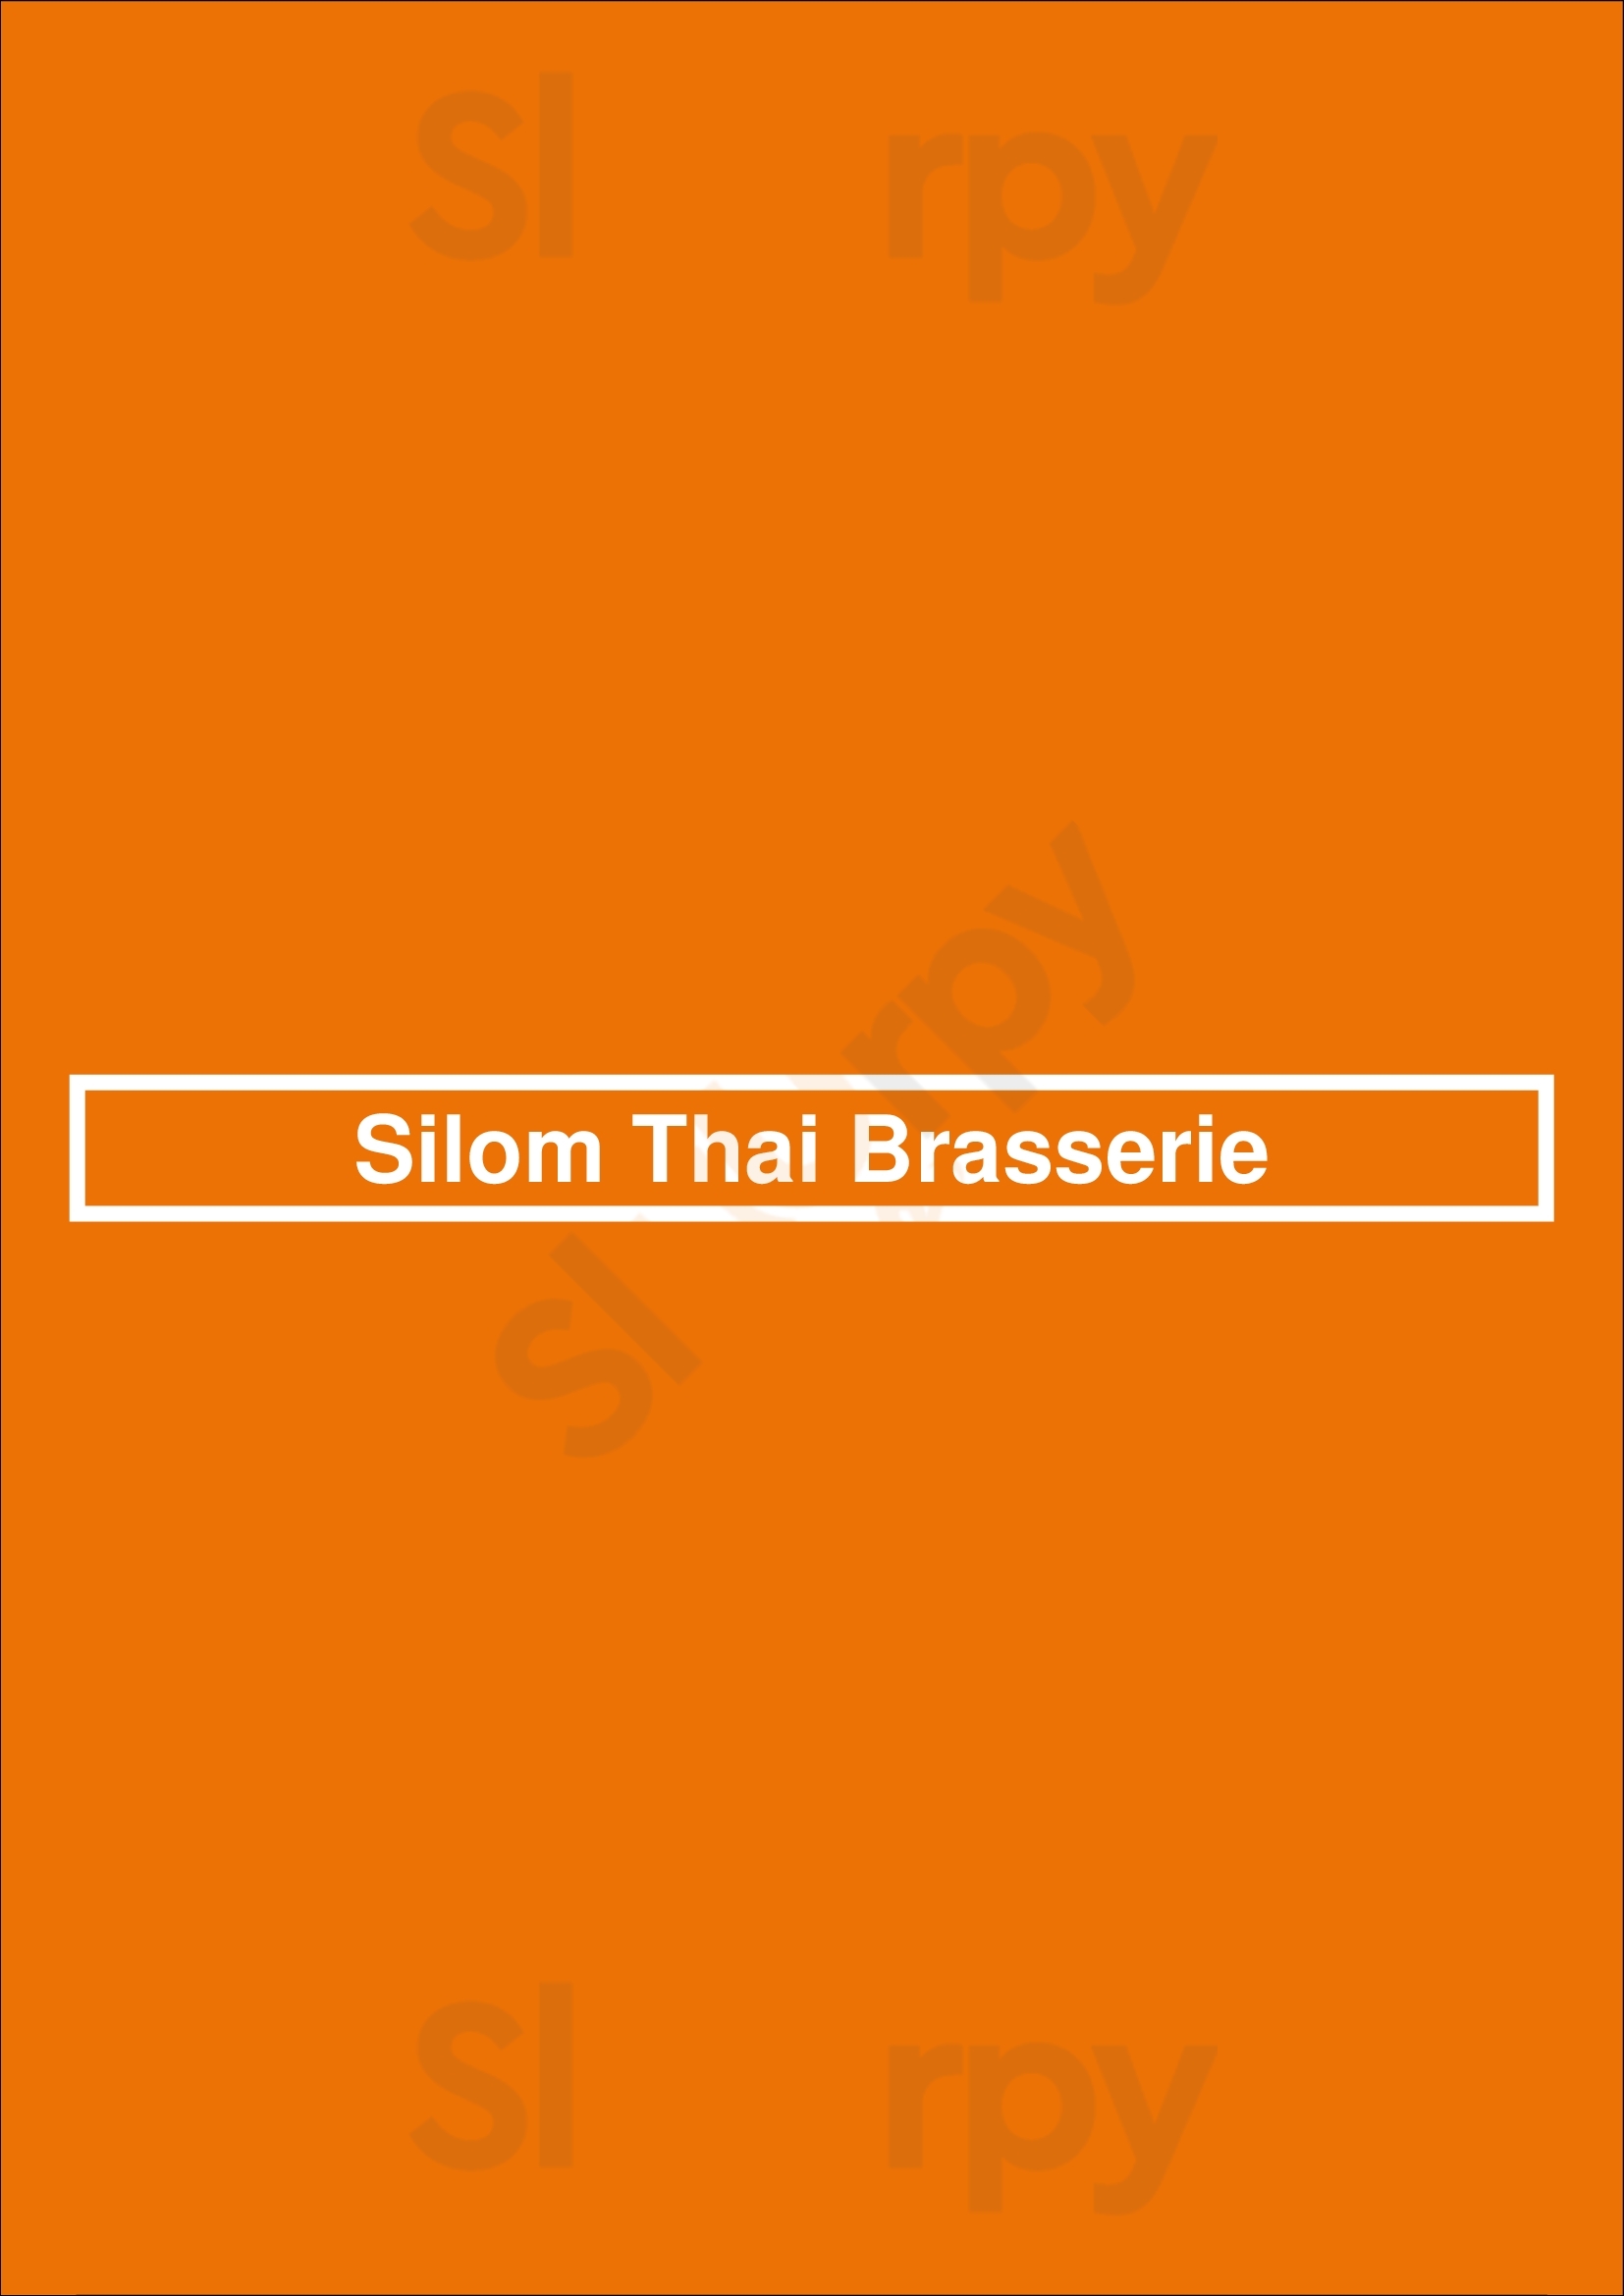 Silom Thai Brasserie Amsterdam Menu - 1